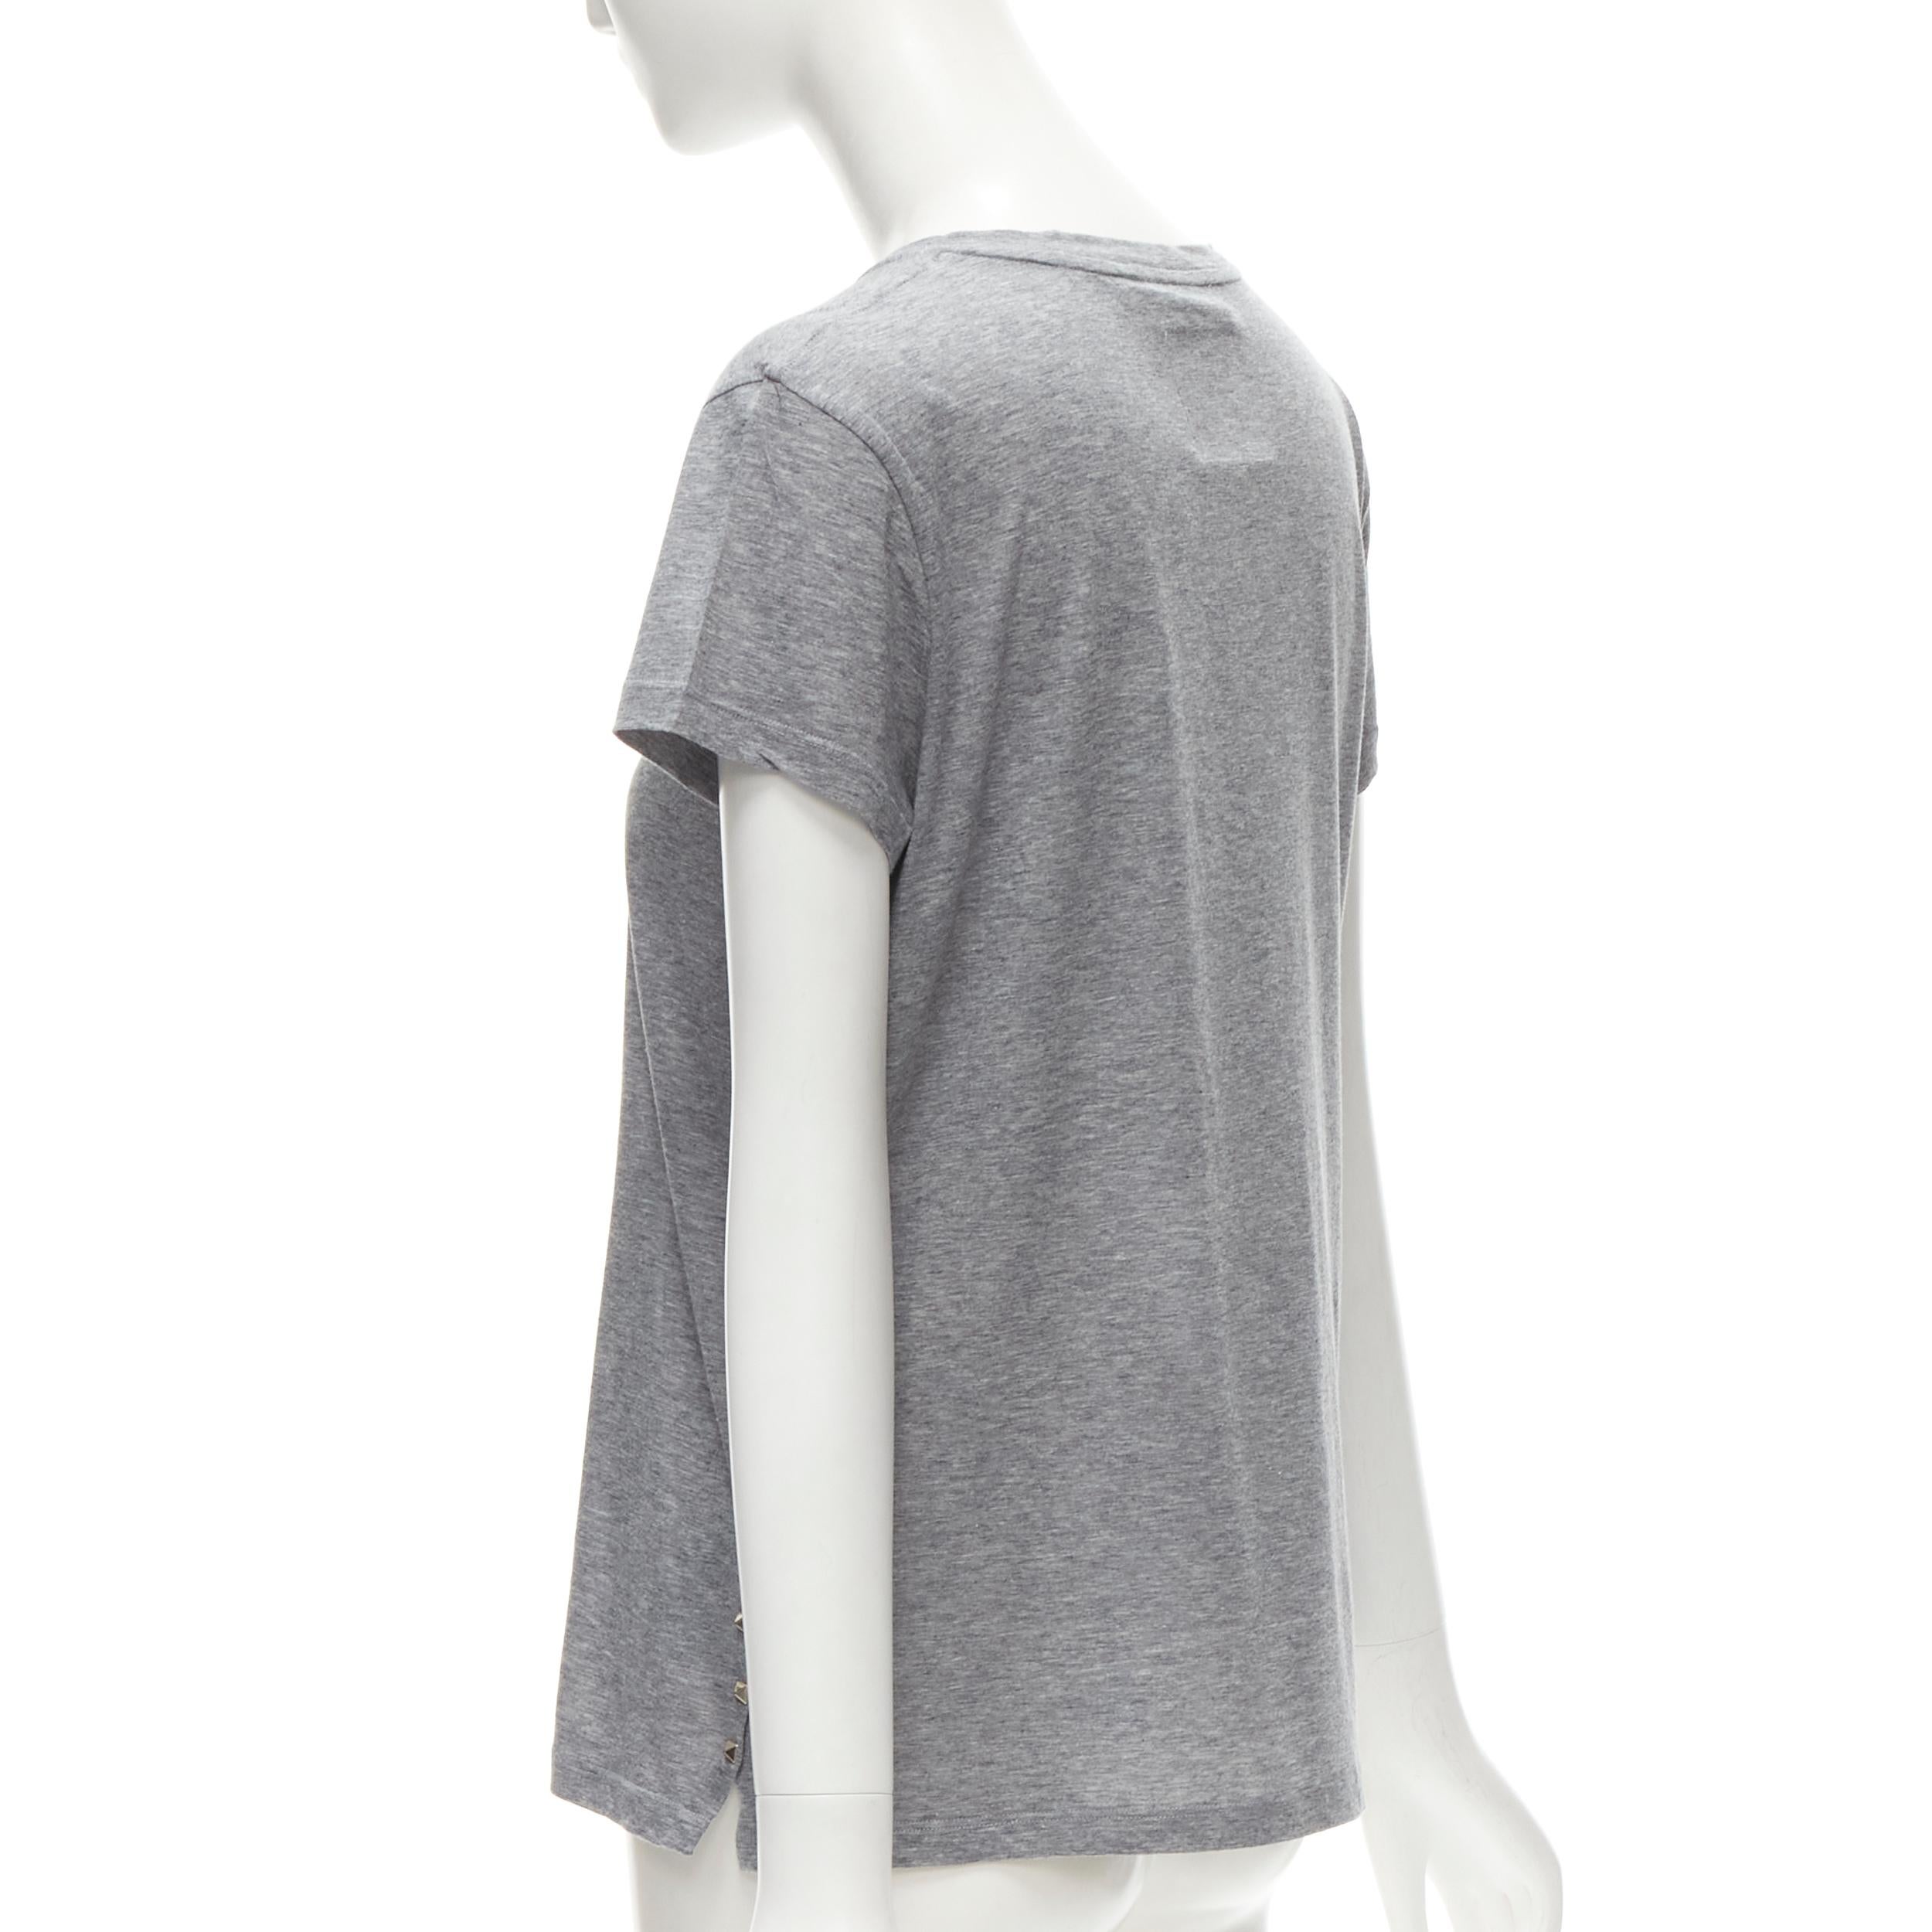 VALENTINO Rockstud 100% cotton grey pyramind spike stud side tshirt S For Sale 2